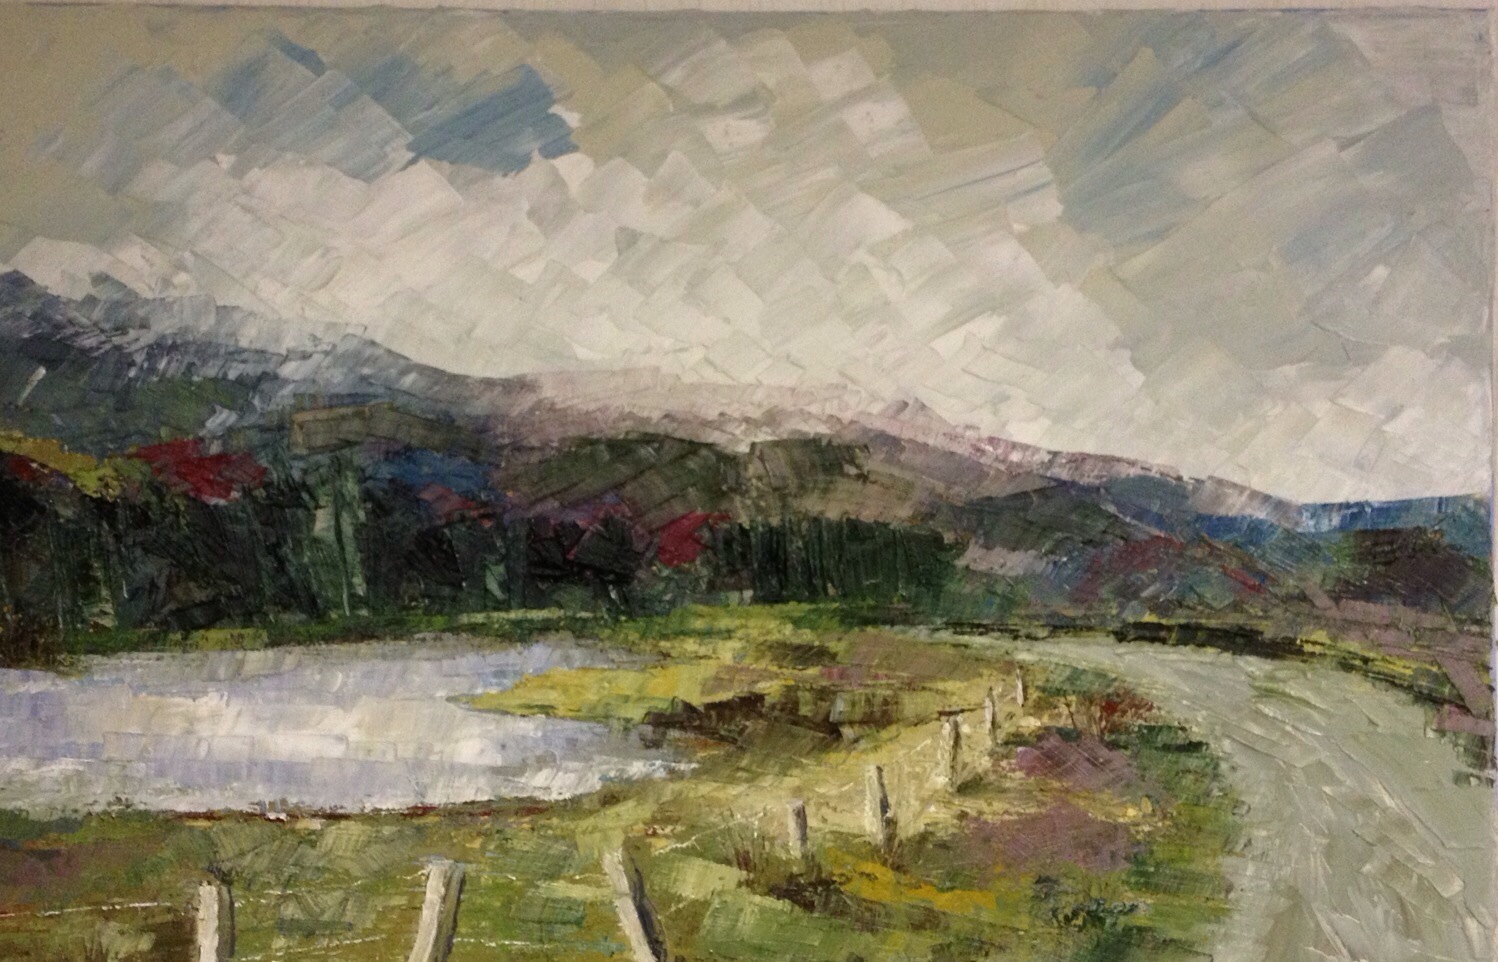 Road to Glen Lyon - oil on canvas - £250